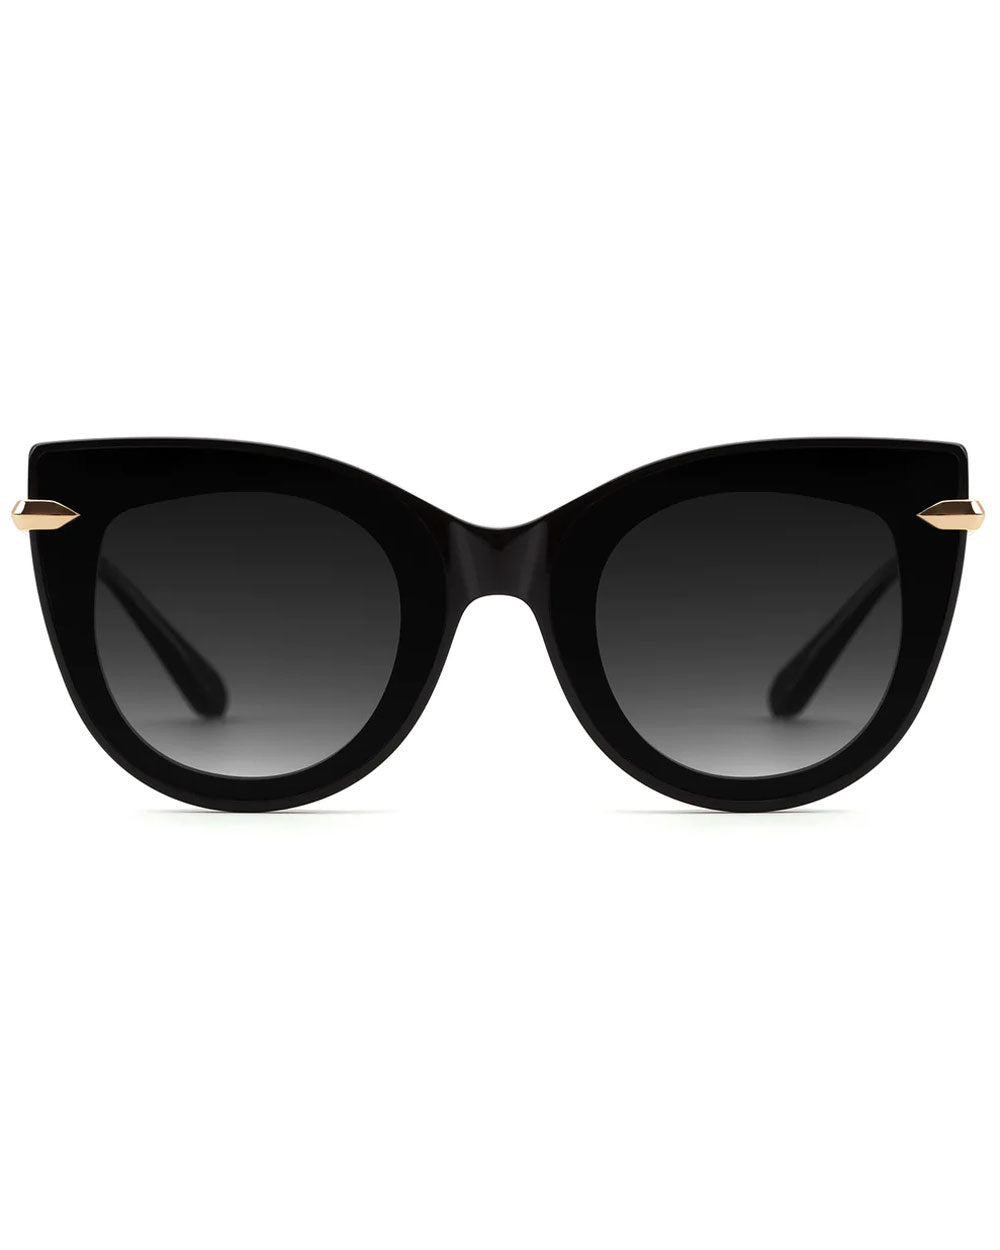 Laveau Nylon Sunglasses in Black and Crystal